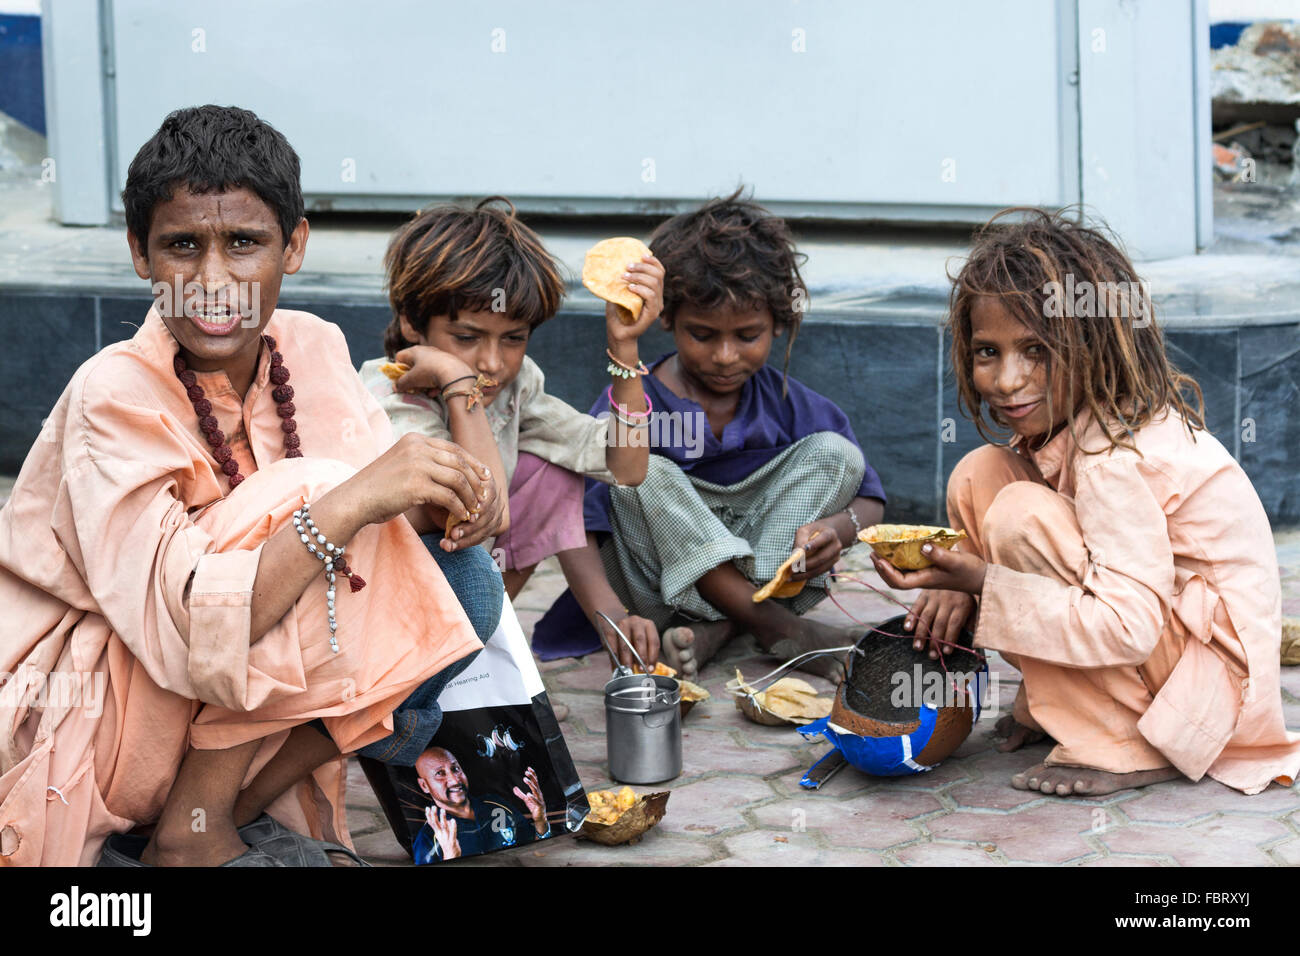 Poor, homeless children eating on the street in Amritsar, India. Stock Photo